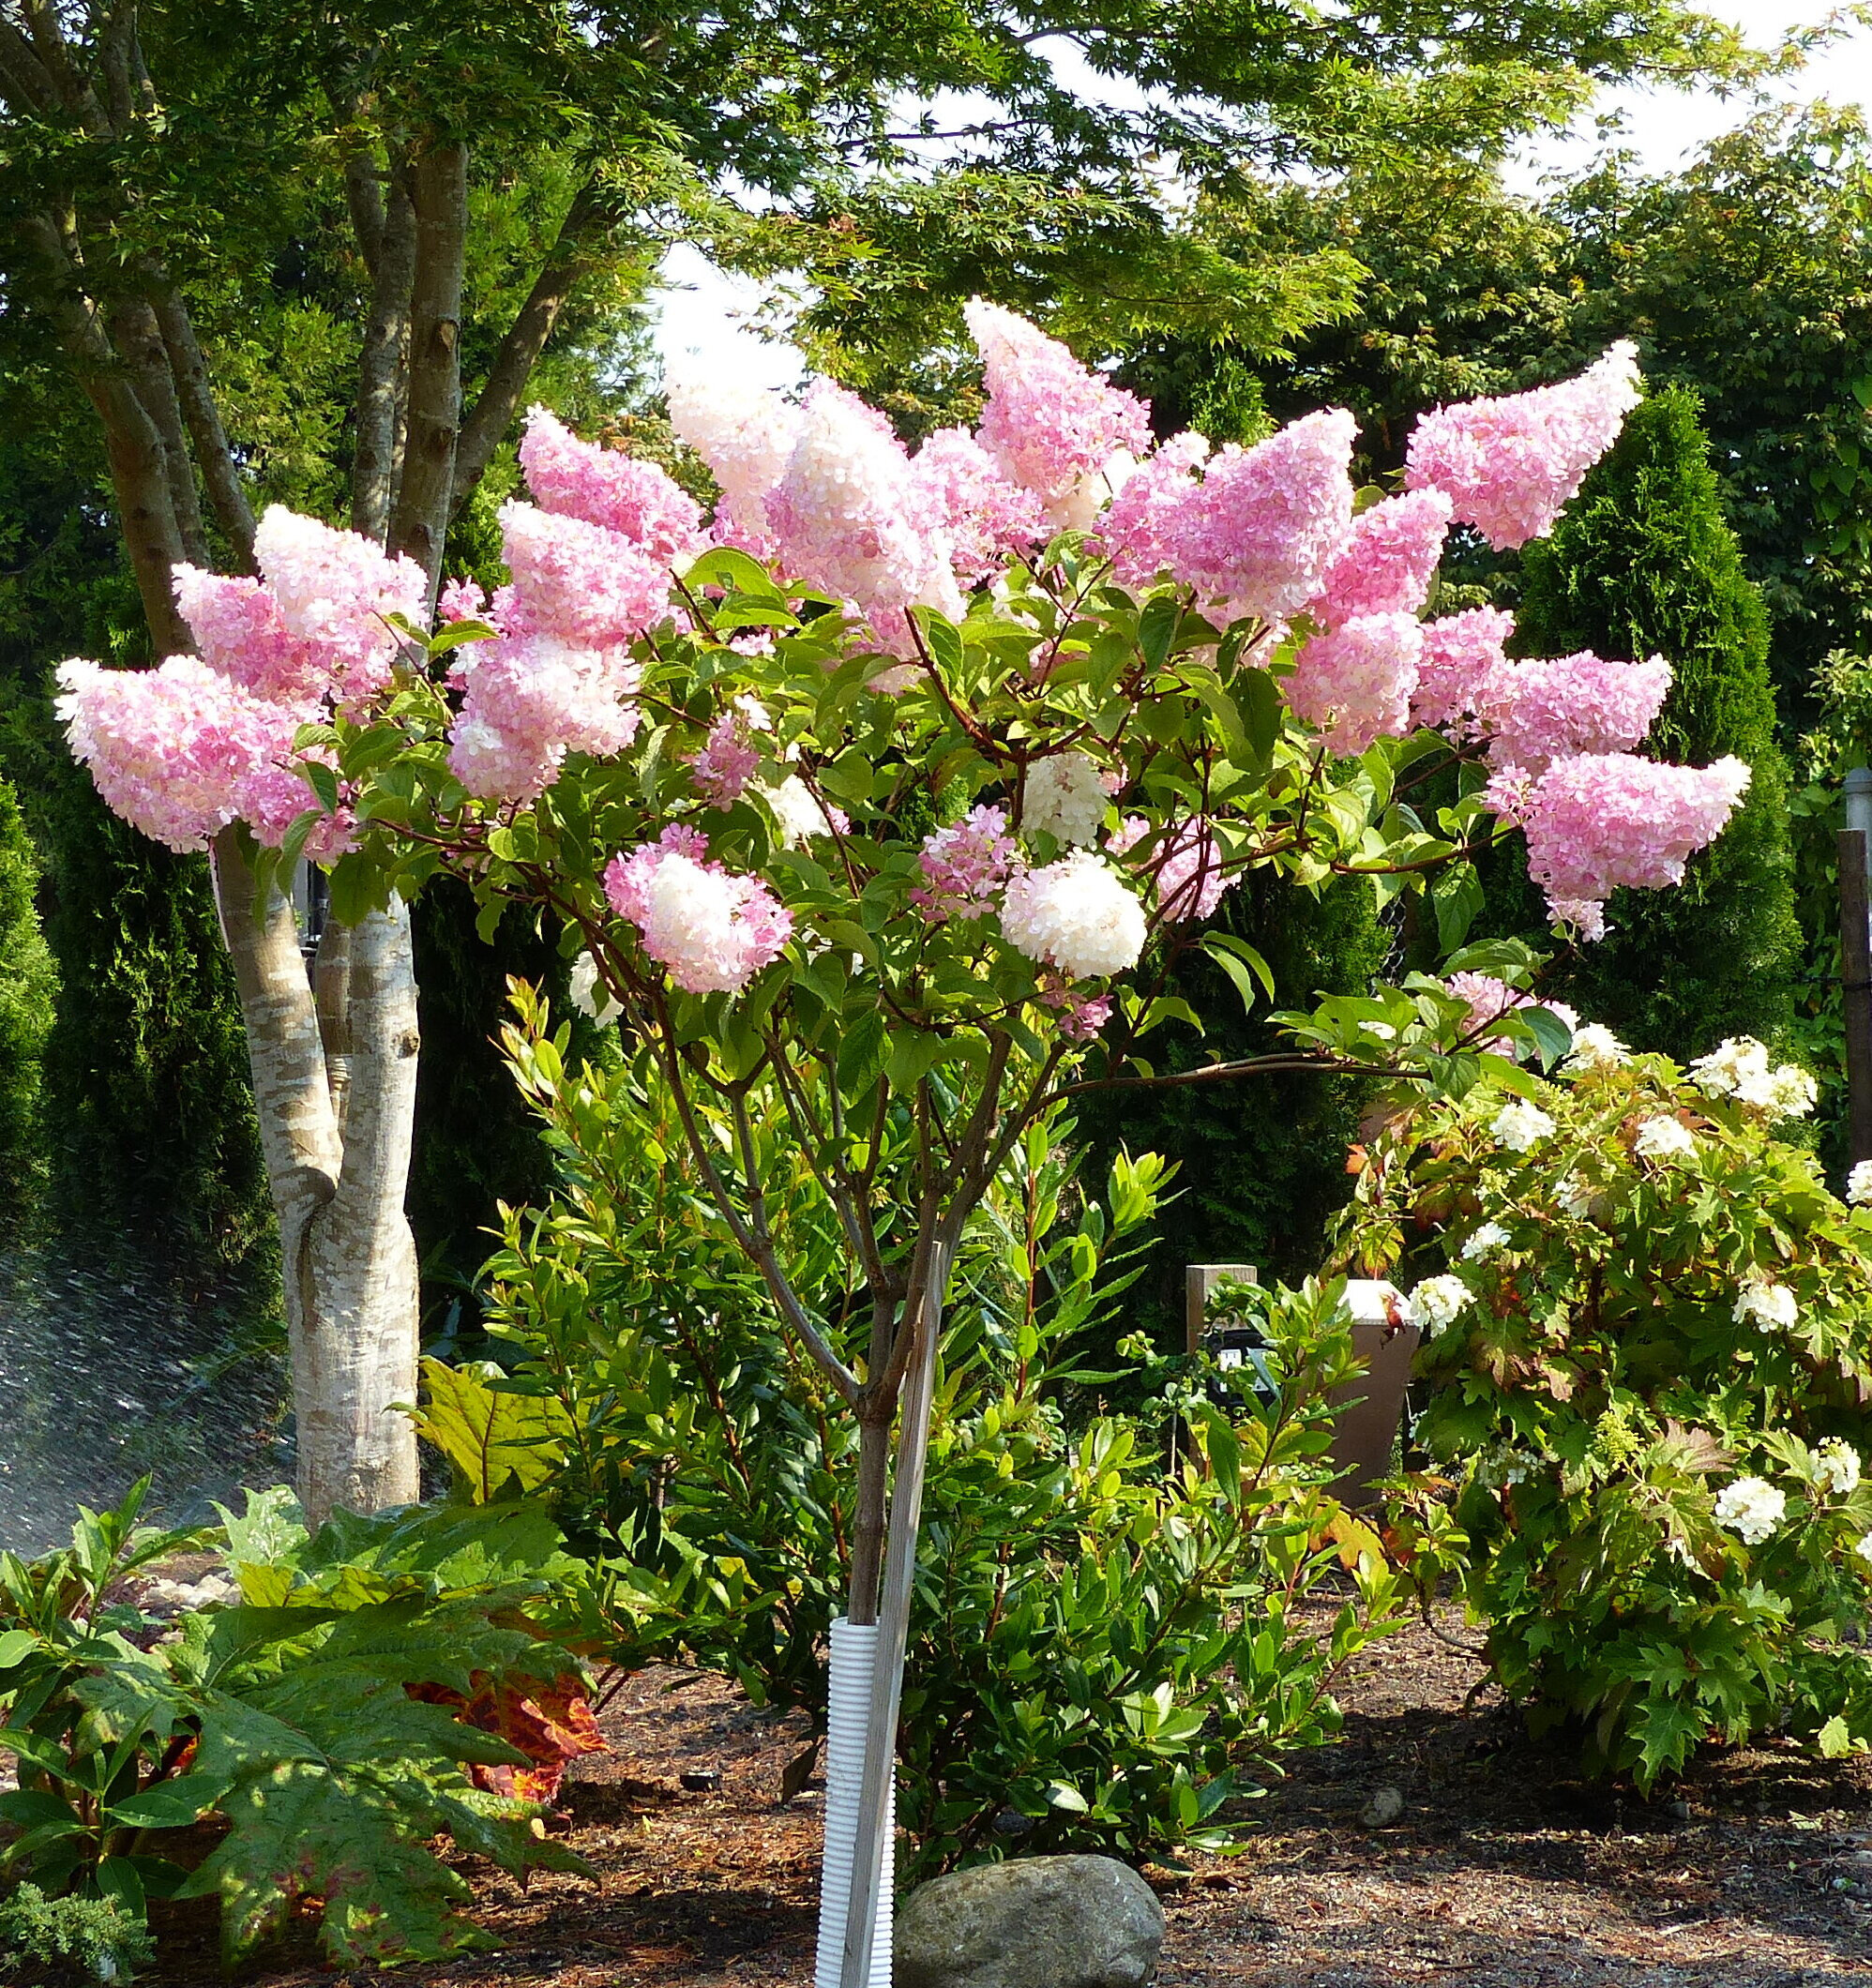  HYDRANGEA TREE 'VANILLA STRAWBERRY ' has a unique tri-tone color palette and it was bred as a small tree versus the typical hydrangea shrub. 